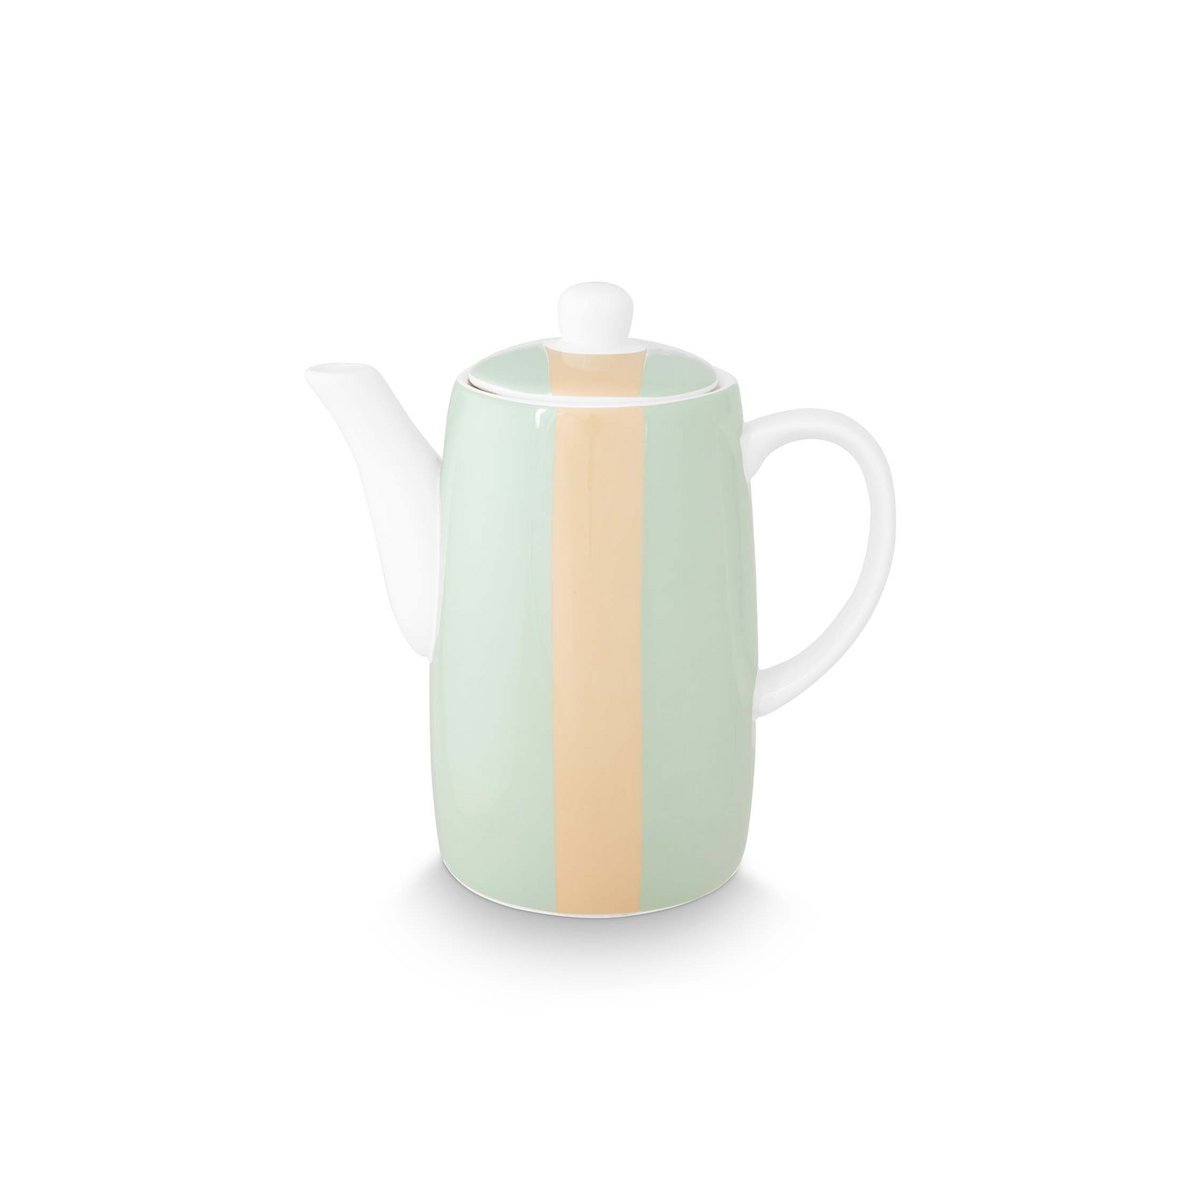 vtwonen - Theepot 'Tea' (Aqua-Peach, 900ml)